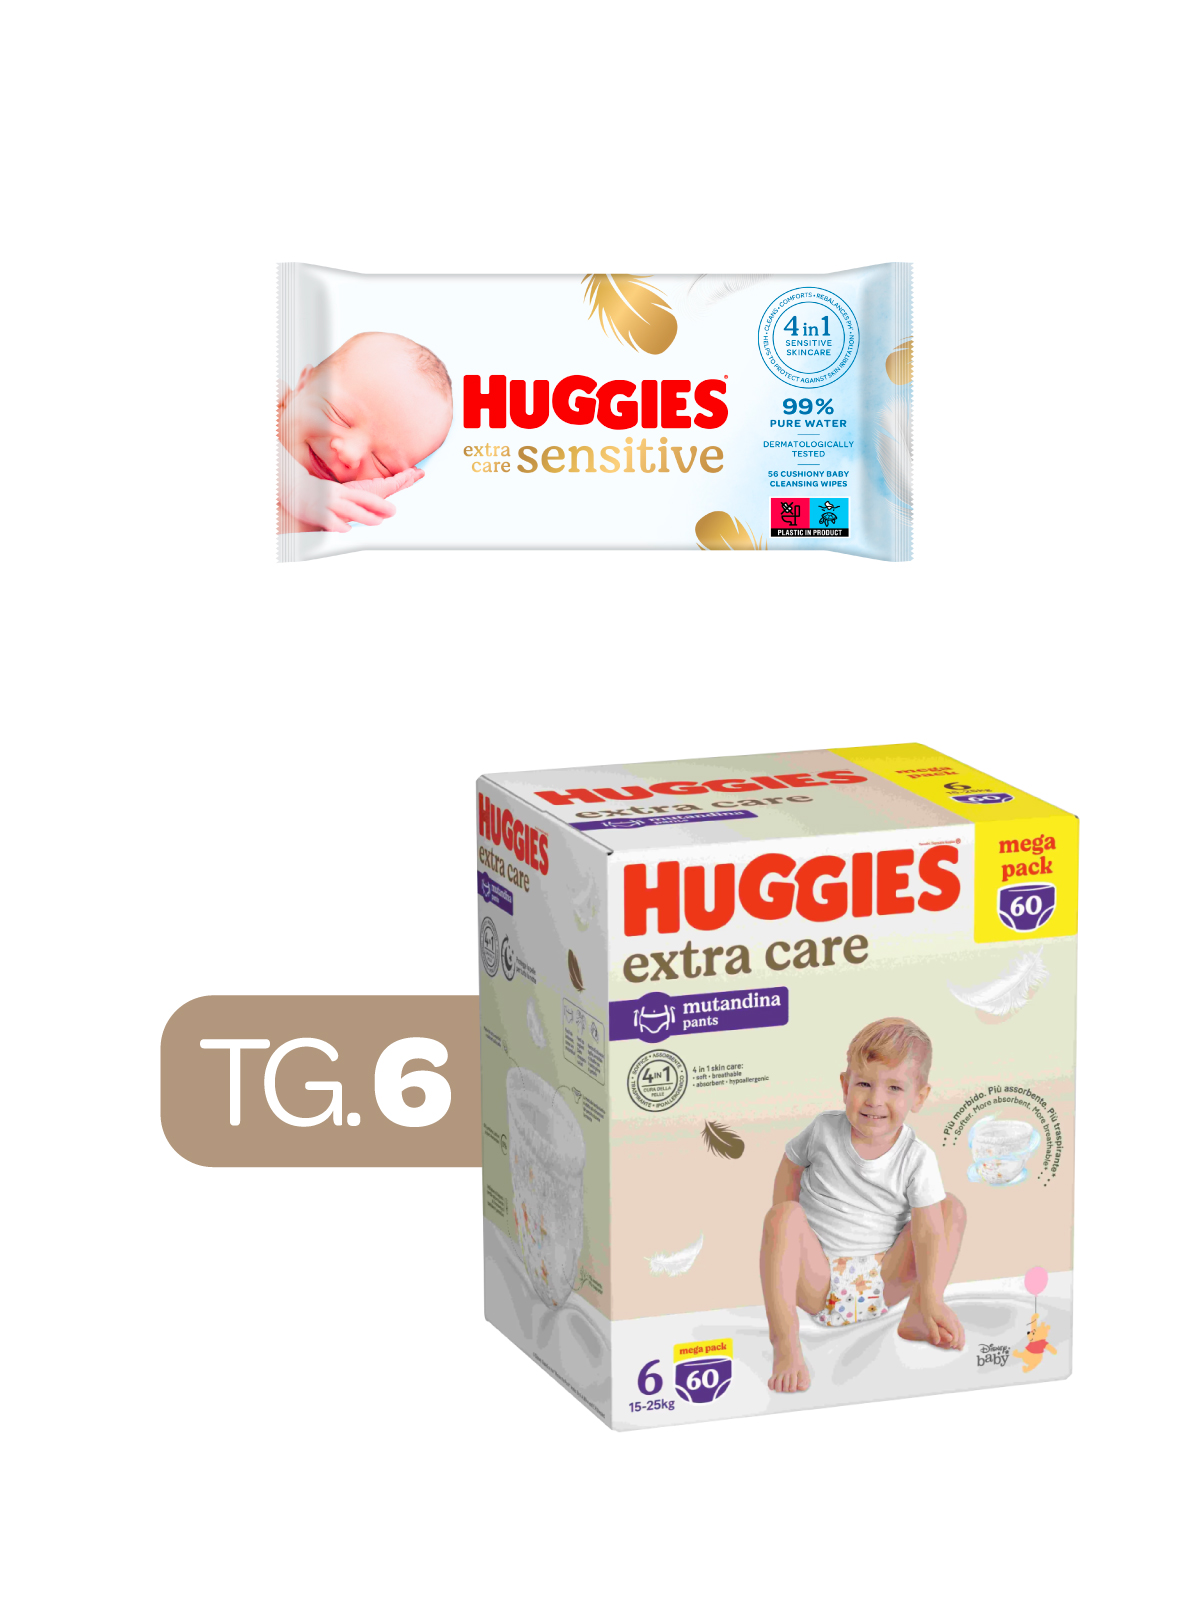 Huggies extra care mutandina mega pack tg. 6 + huggies -extra care huggies salviette  56 - 